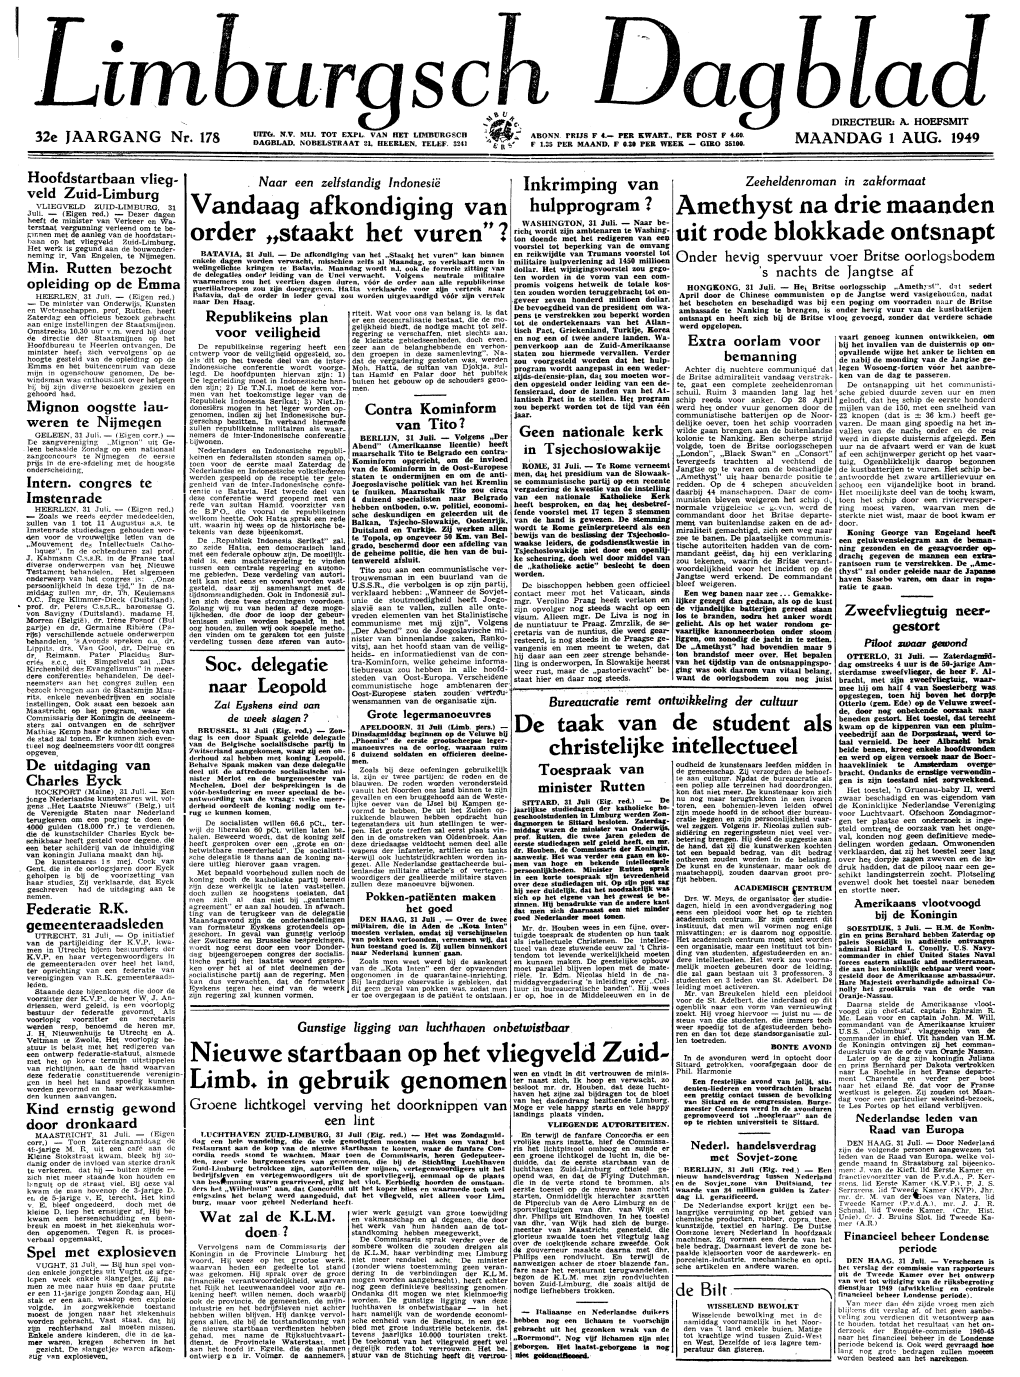 Limburgsch Dagblad Van Maandag 1 Augustus 1949